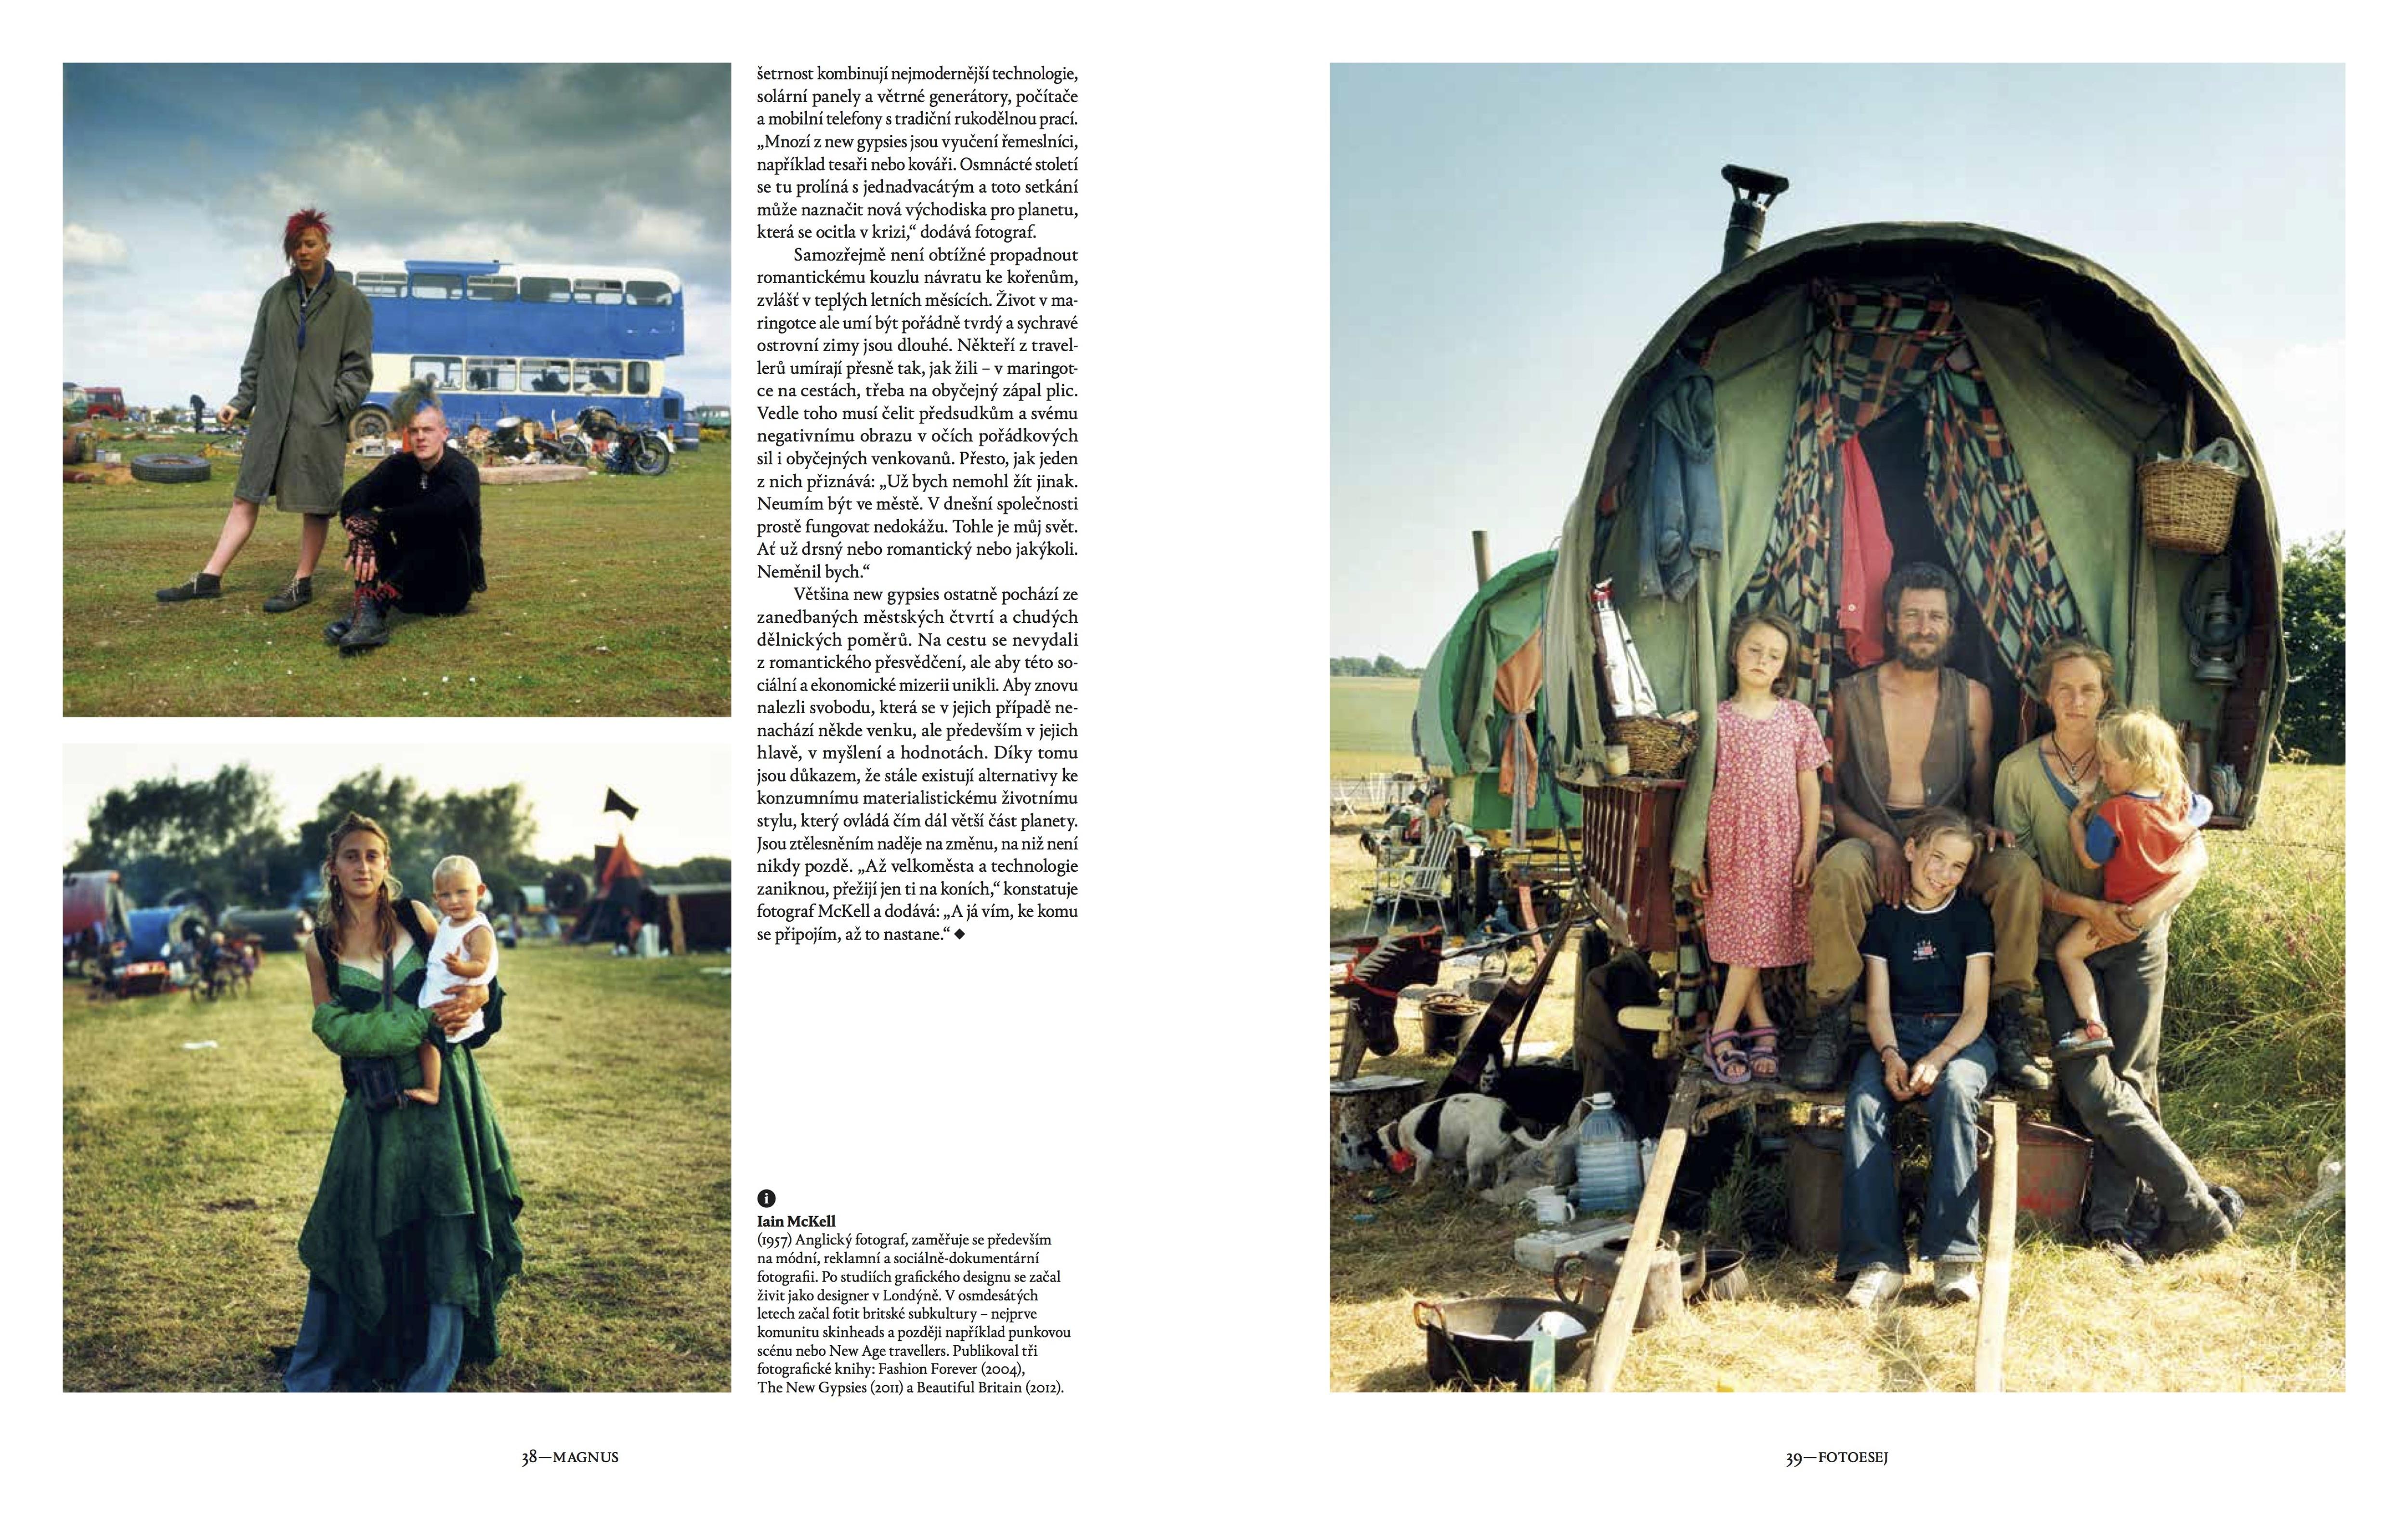 cover: Iain McKell's 'The New Gypsies' in Magnus - Institute Artist